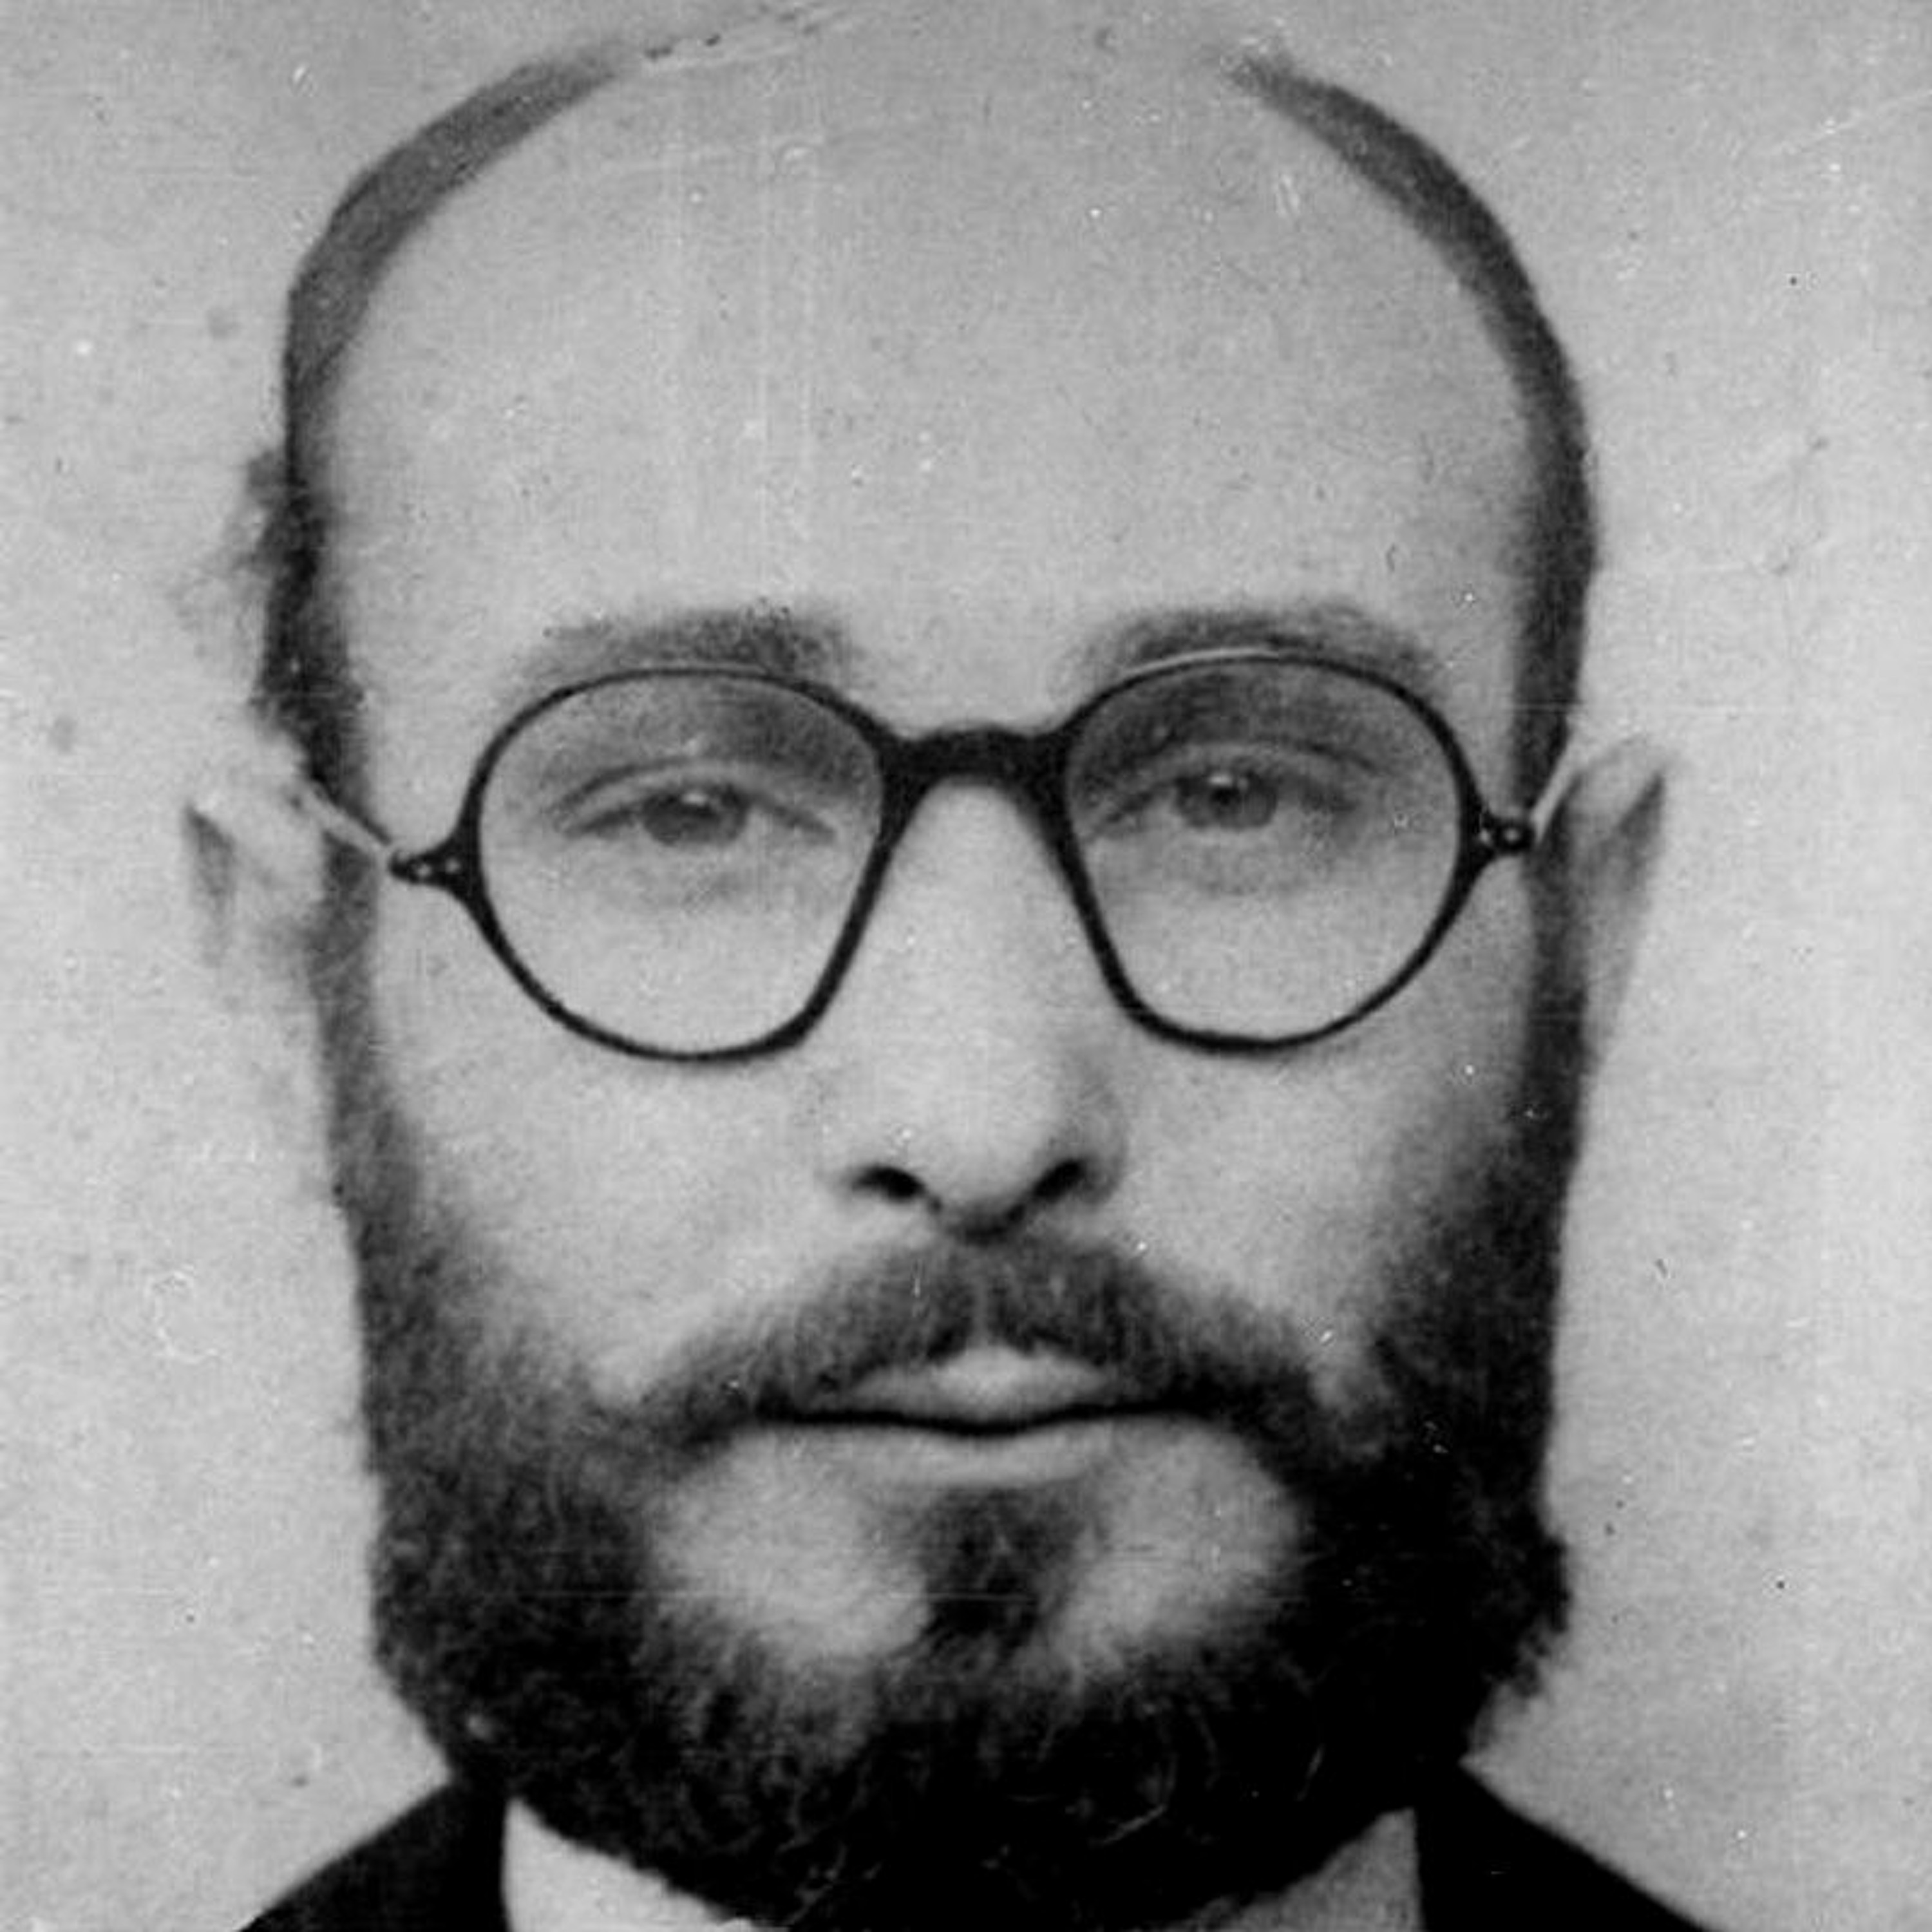 #3: Juan Pujol García - The Spy who won WWII